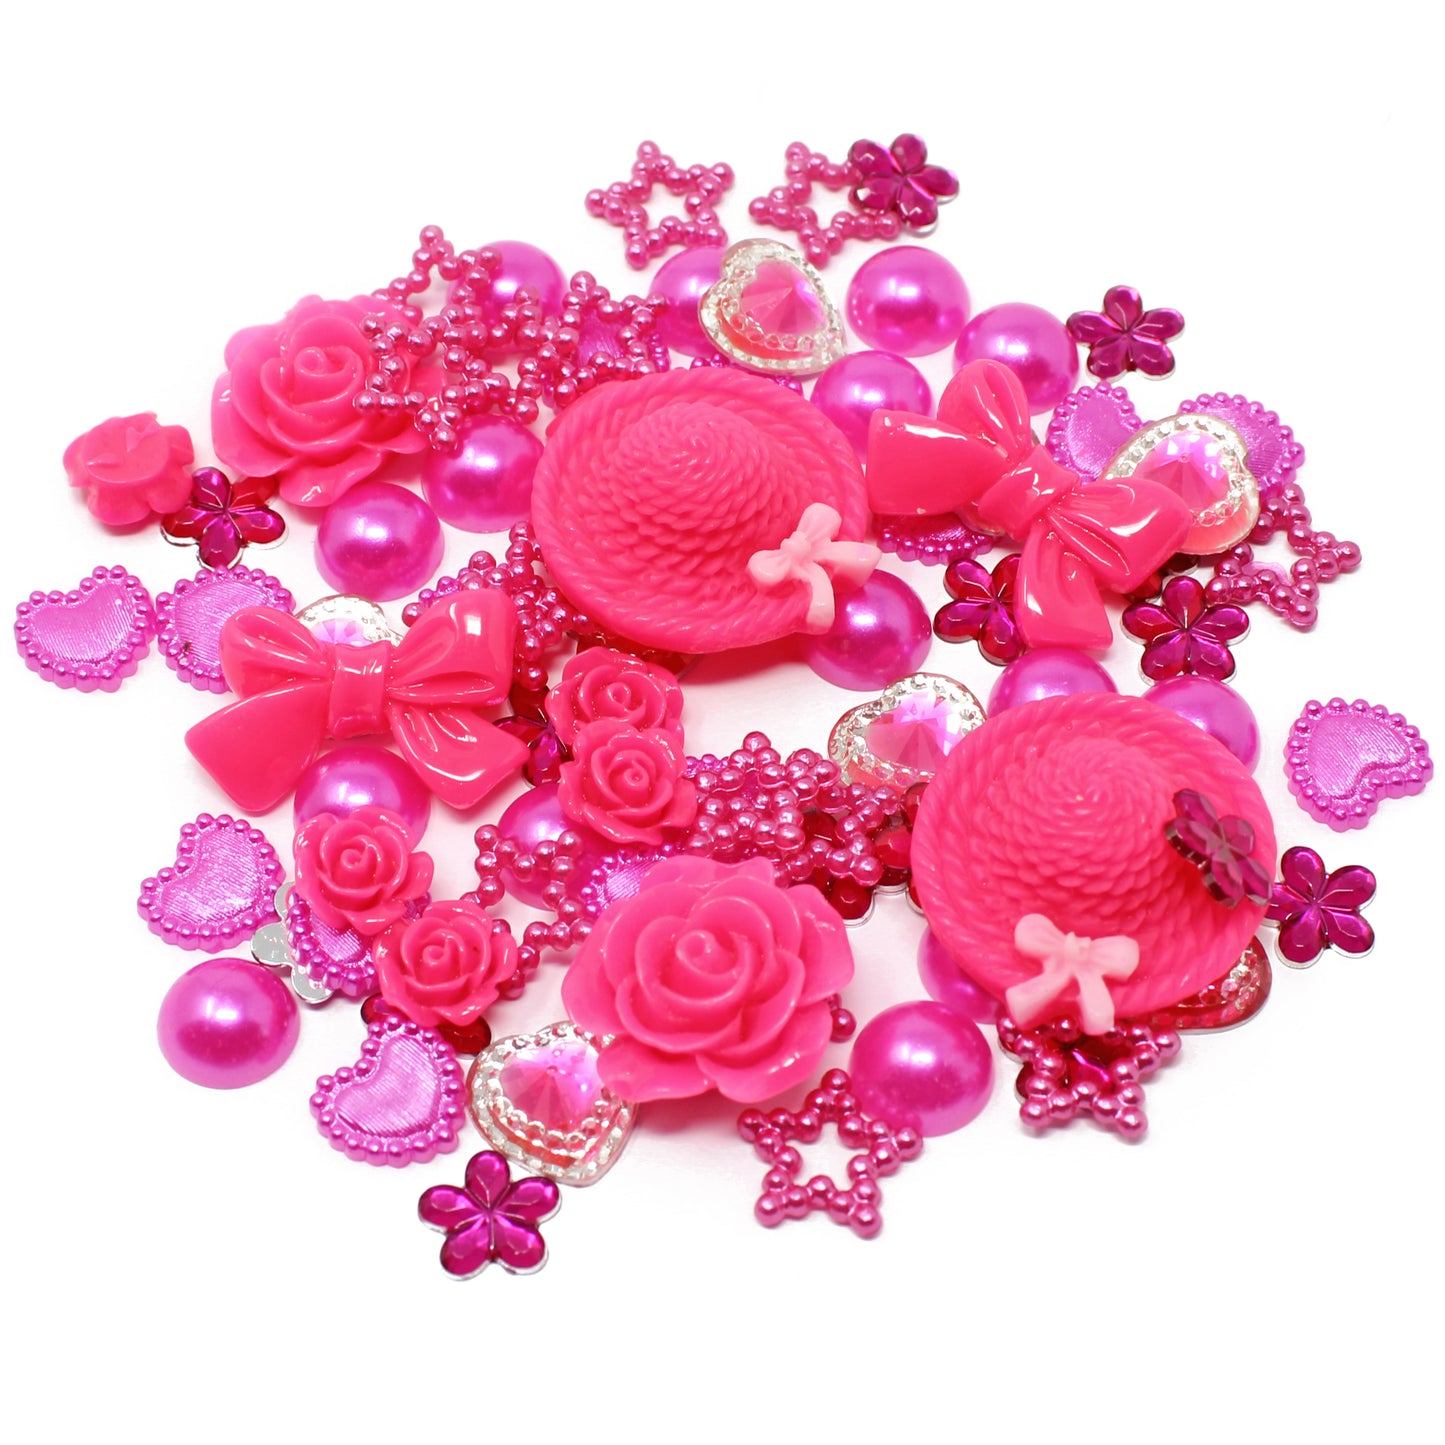 Bright Pink 80 Mix Resin Craft Embellishment Flatbacks